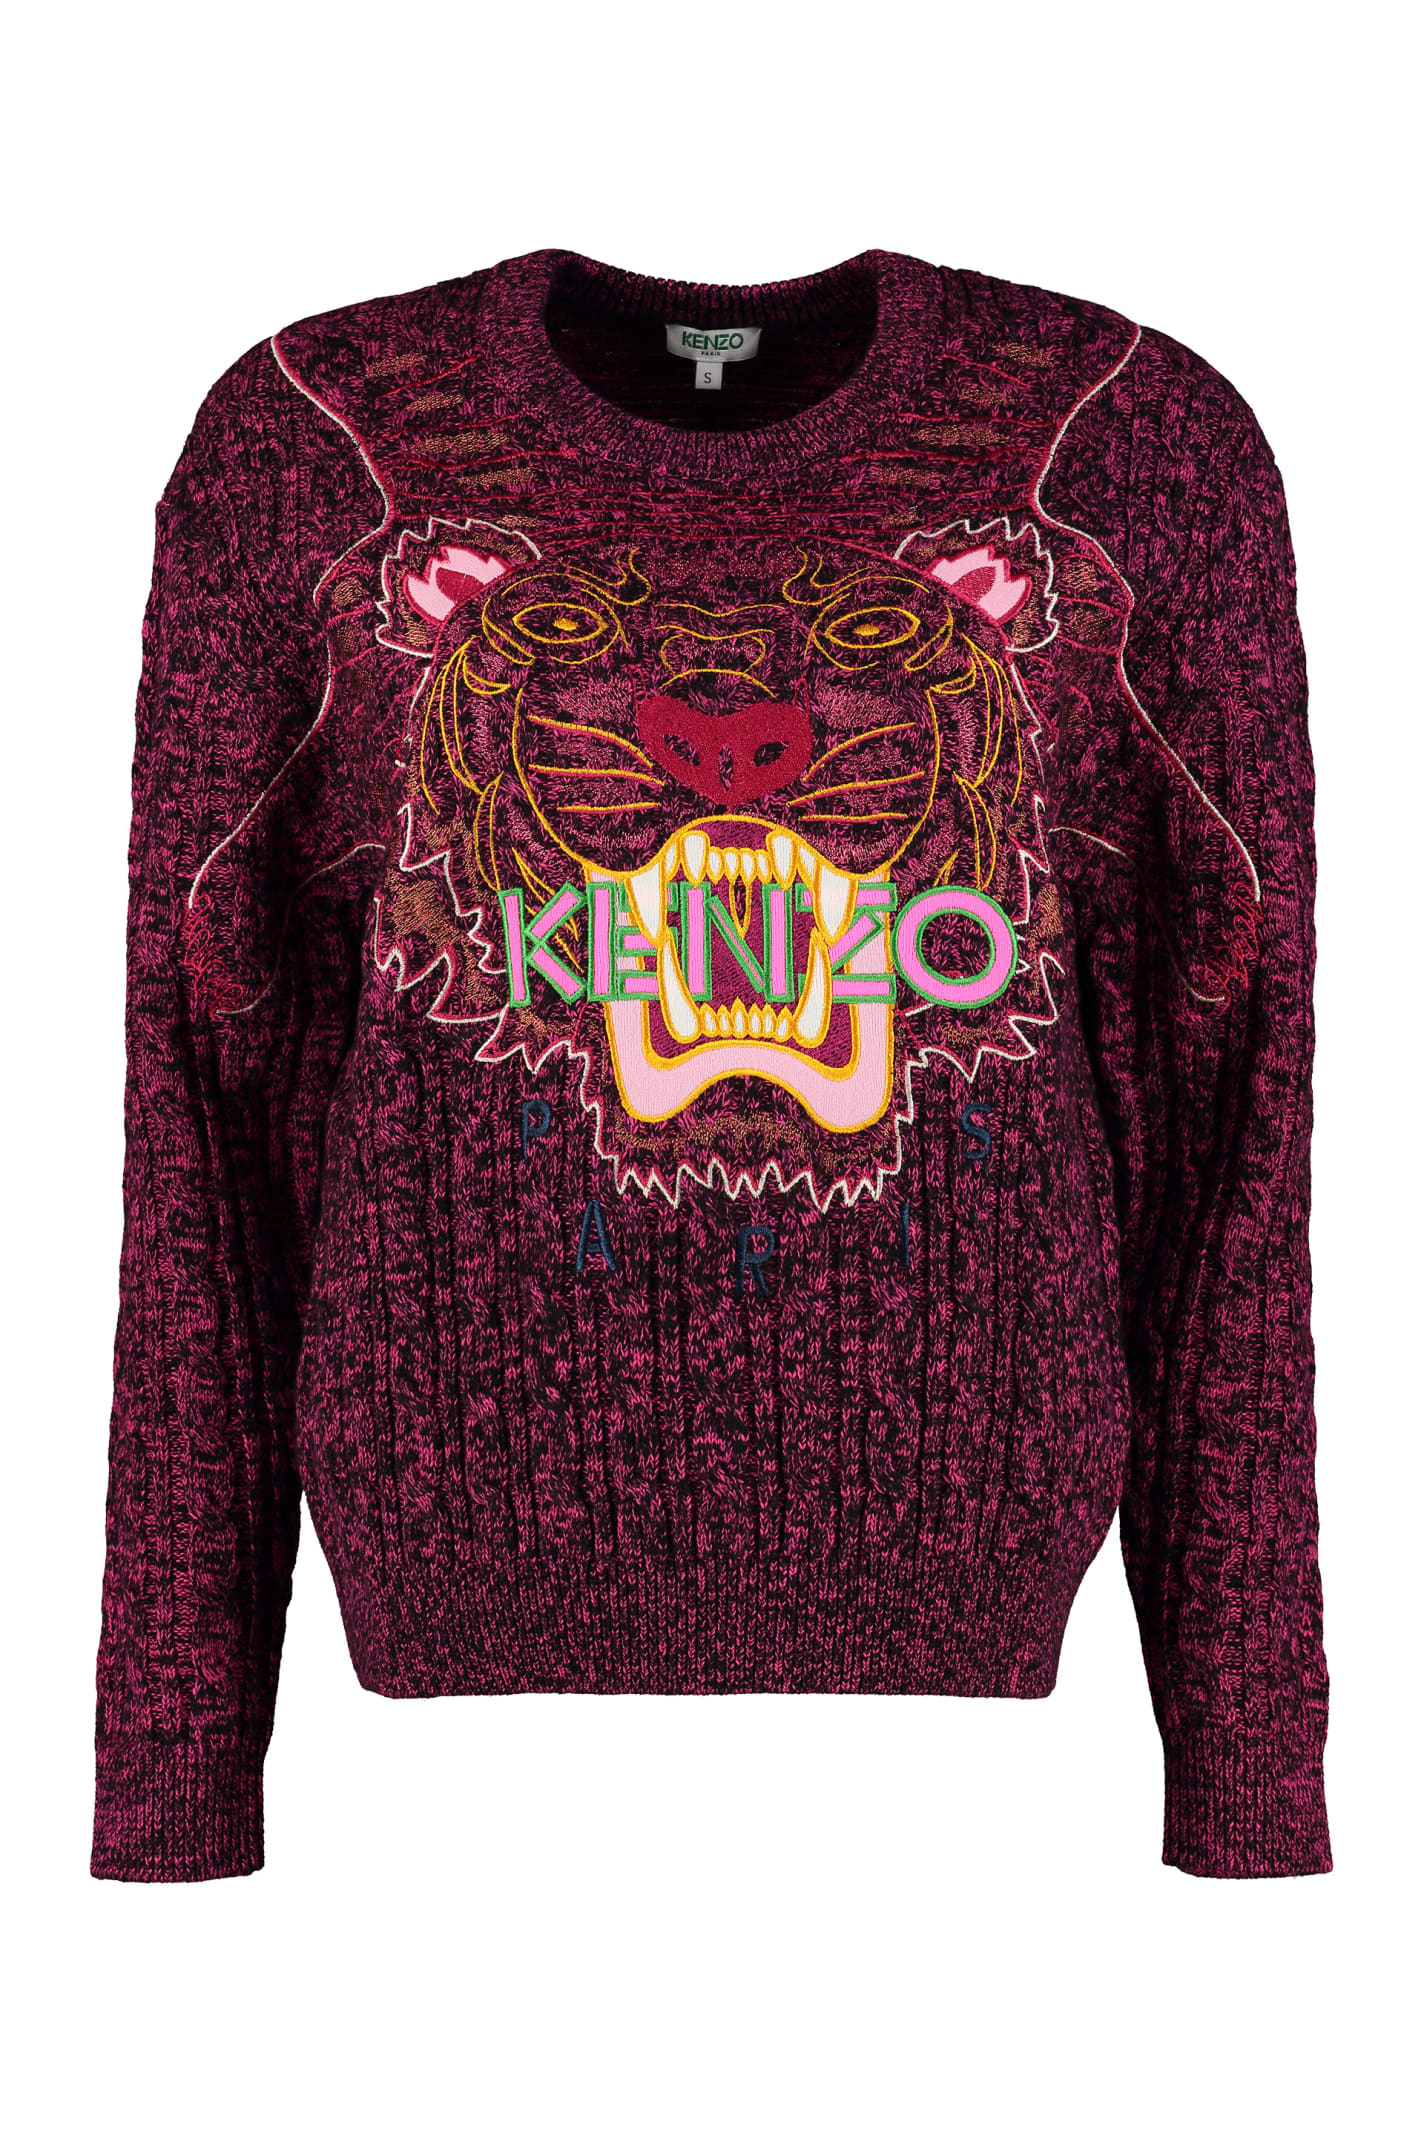 maroon kenzo sweater Cheaper Than 